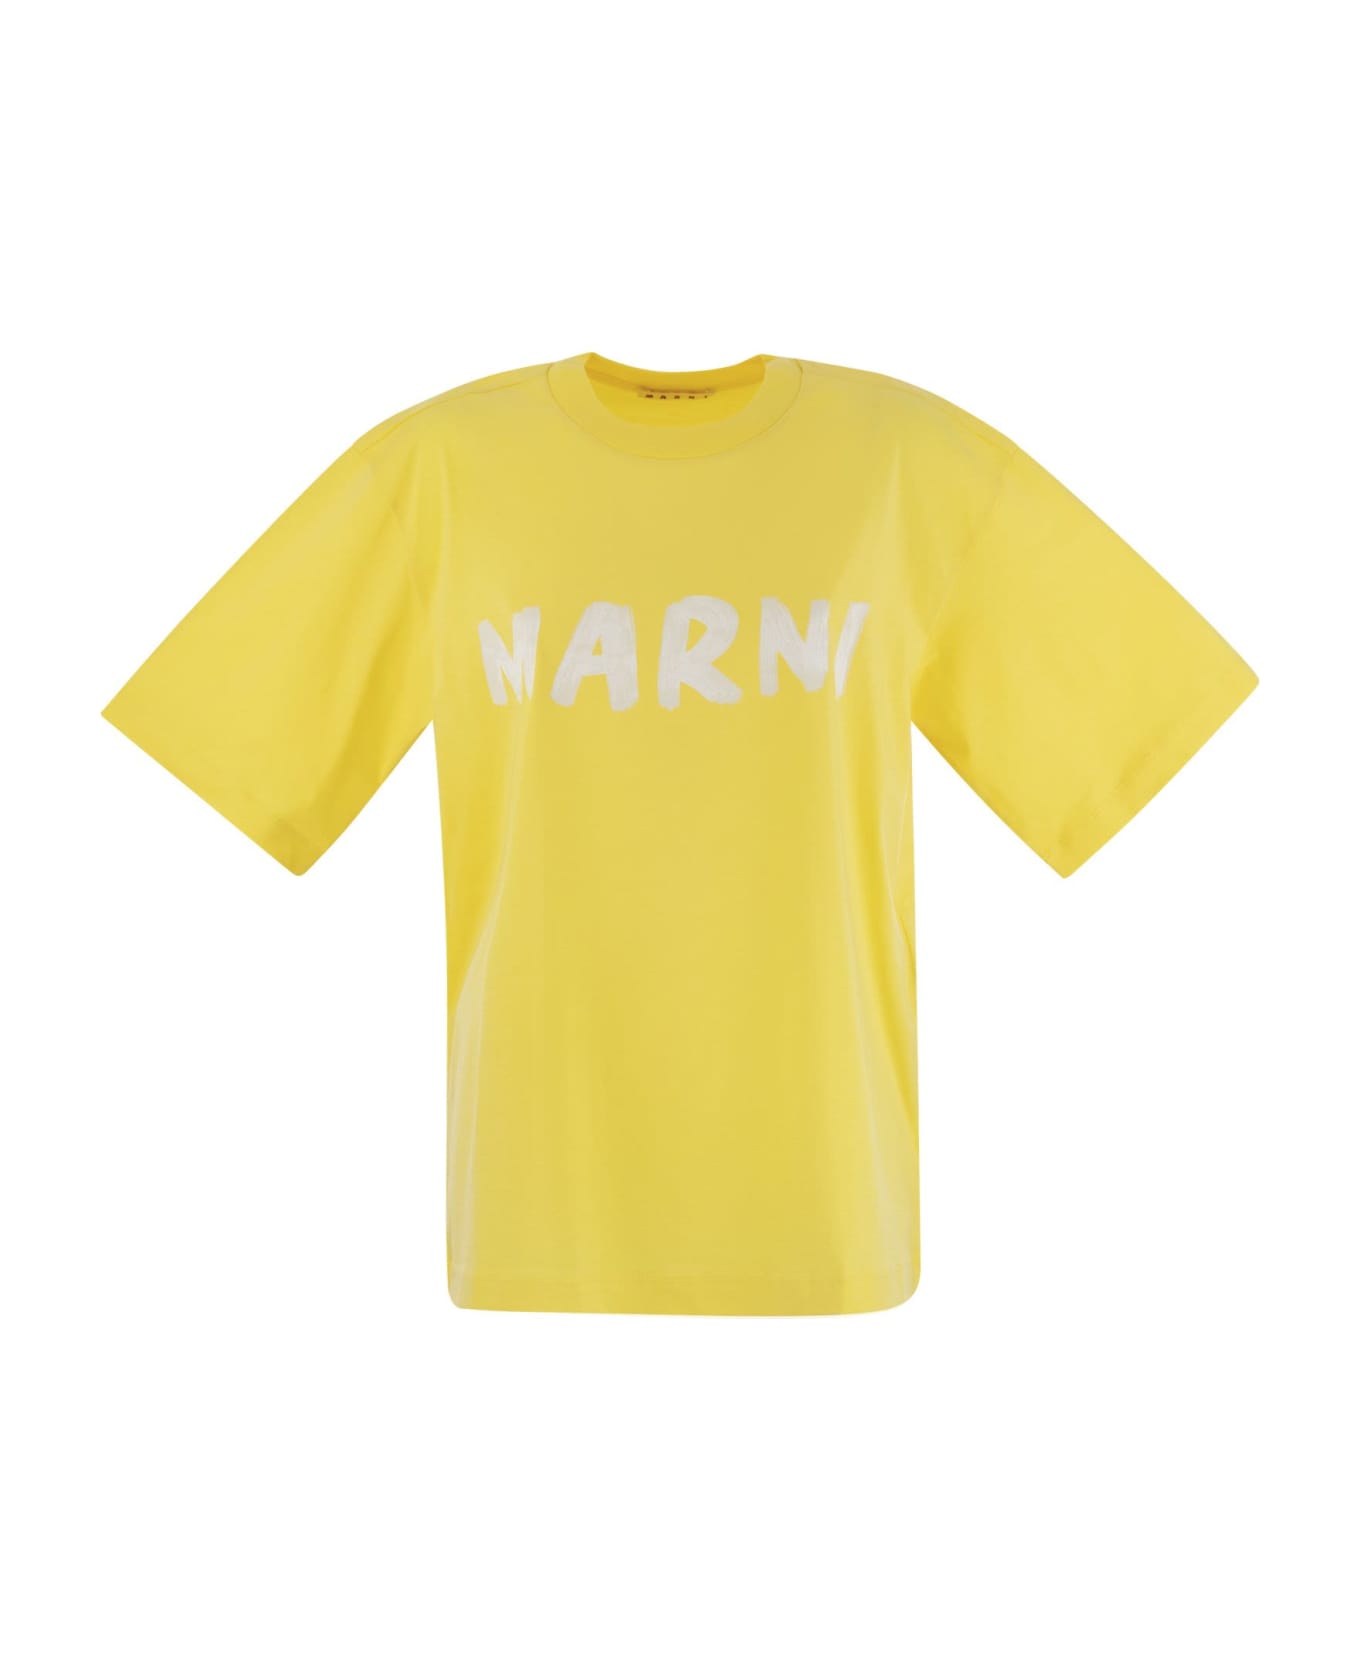 Marni Cotton Jersey T-shirt With Marni Print - Giallo Tシャツ